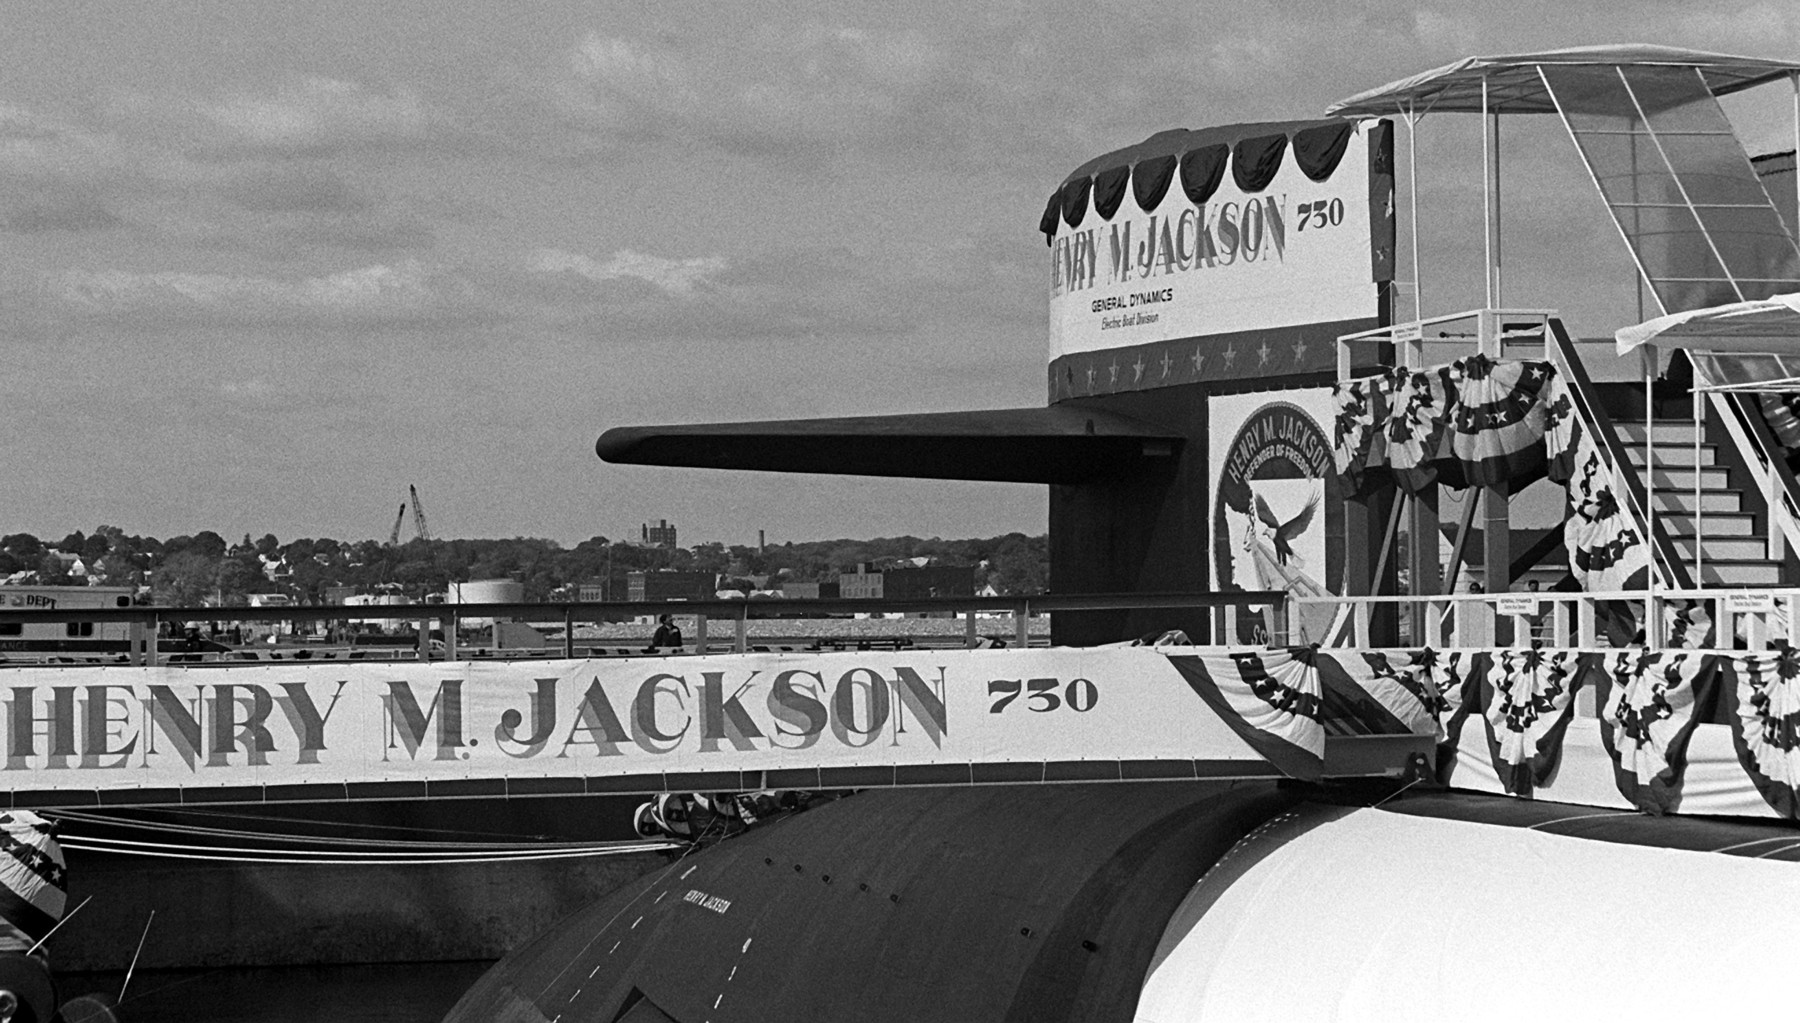 ssbn-730 uss henry m. jackson ohio class ballistic missile submarine 1984 30 commissioning ceremony groton connecticut